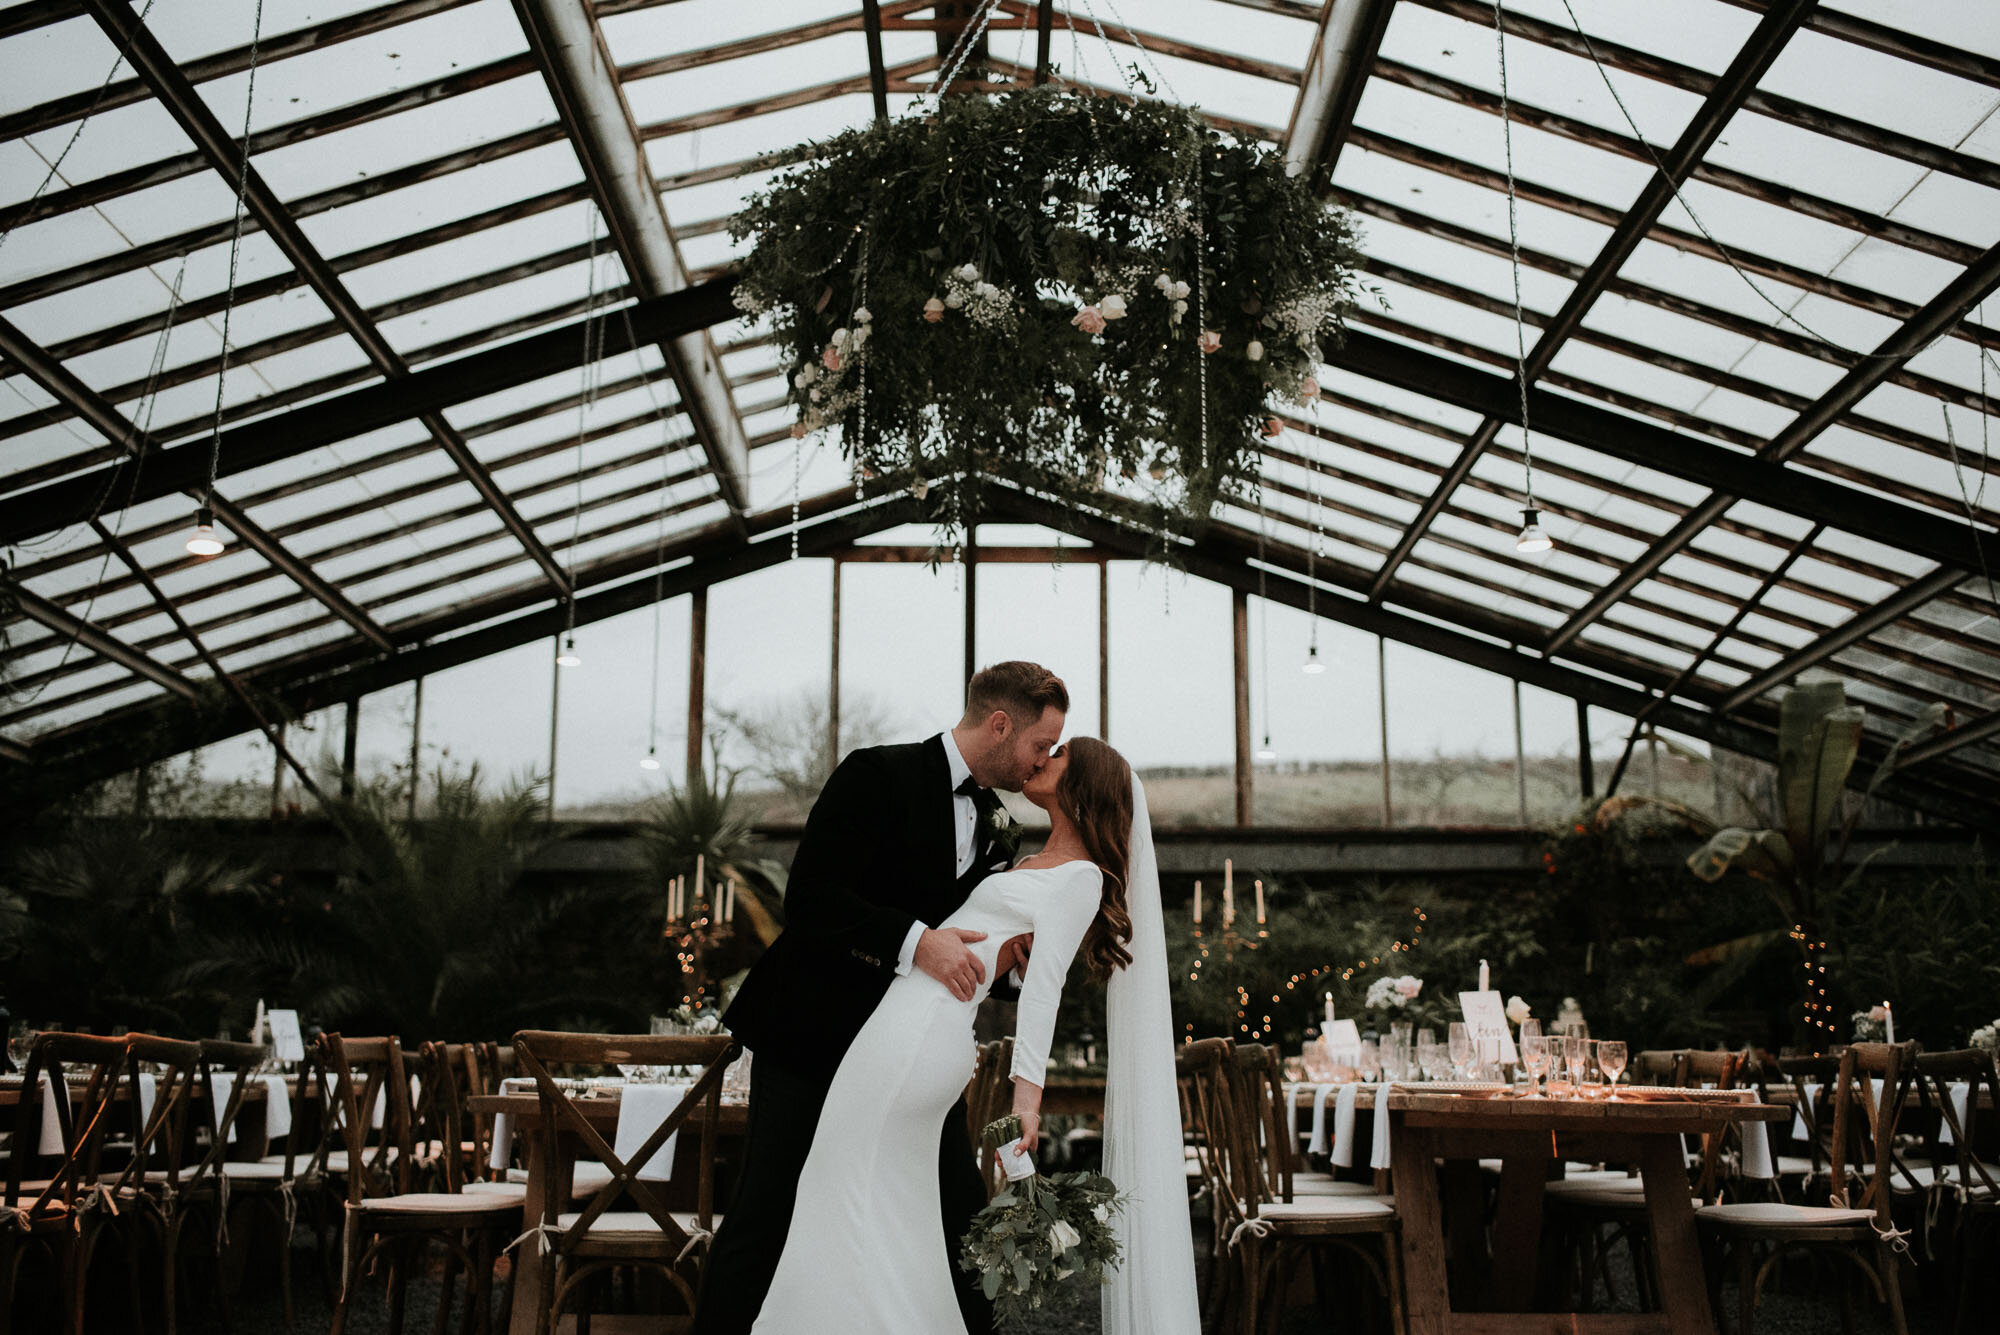 Anran Barn Wedding // Devon Wedding Photographer Katy Jones // Natural style wedding photography  // Fine art romantic images